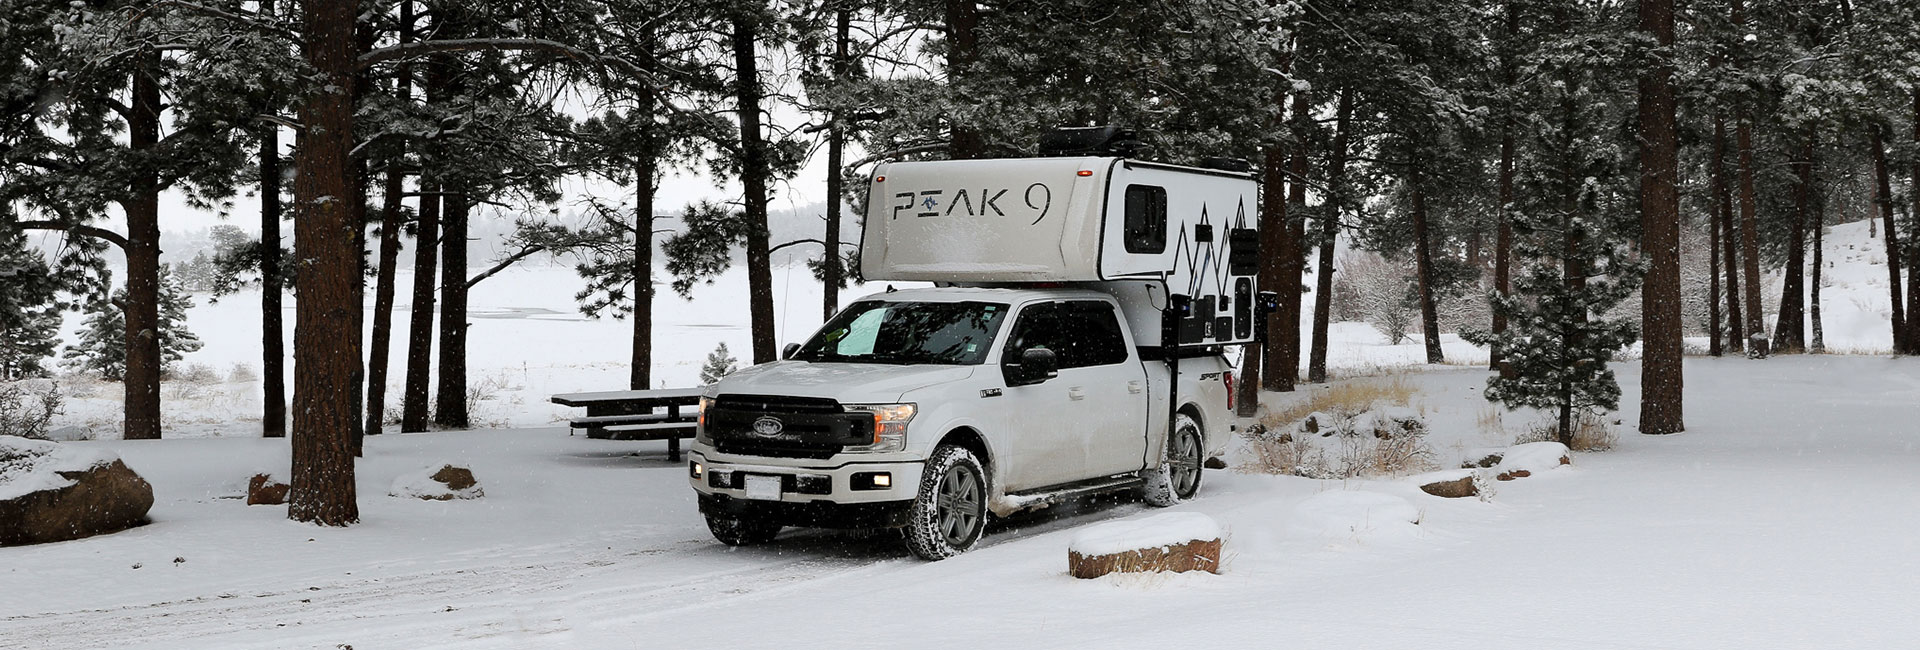 Truck camper in the snow